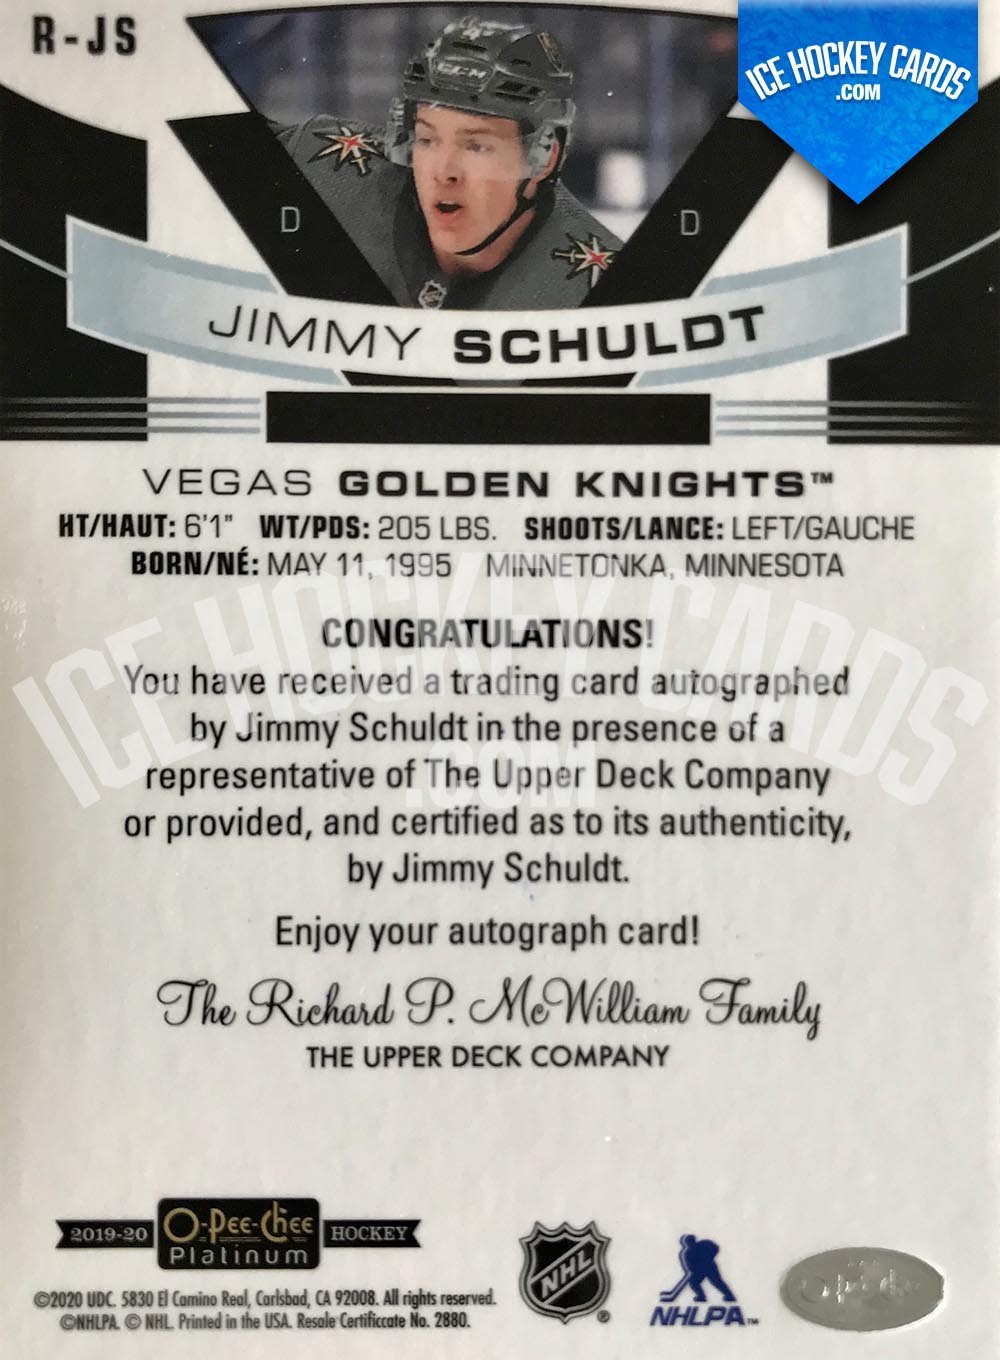 Upper Deck - OPC Platinum 2019-20 - Jimmy Schuldt Rookie Autos Autograph Card back